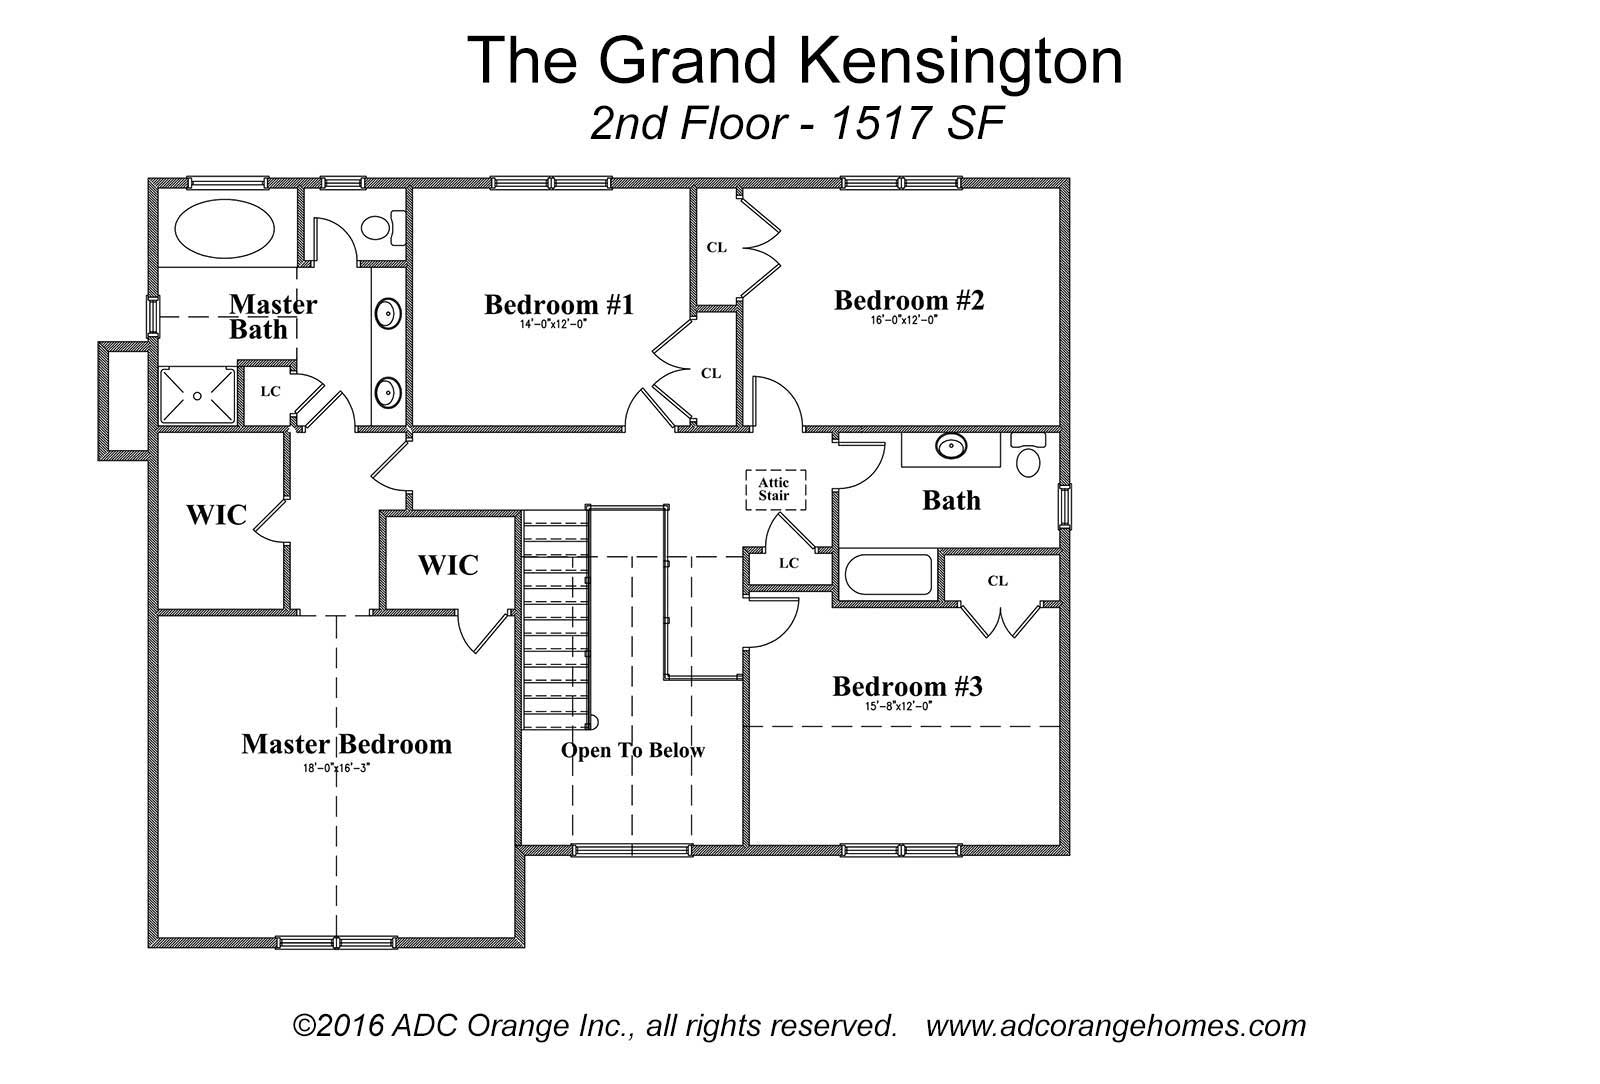 2nd Floor Plan for Grand Kensington - New Home in Orange County, New York